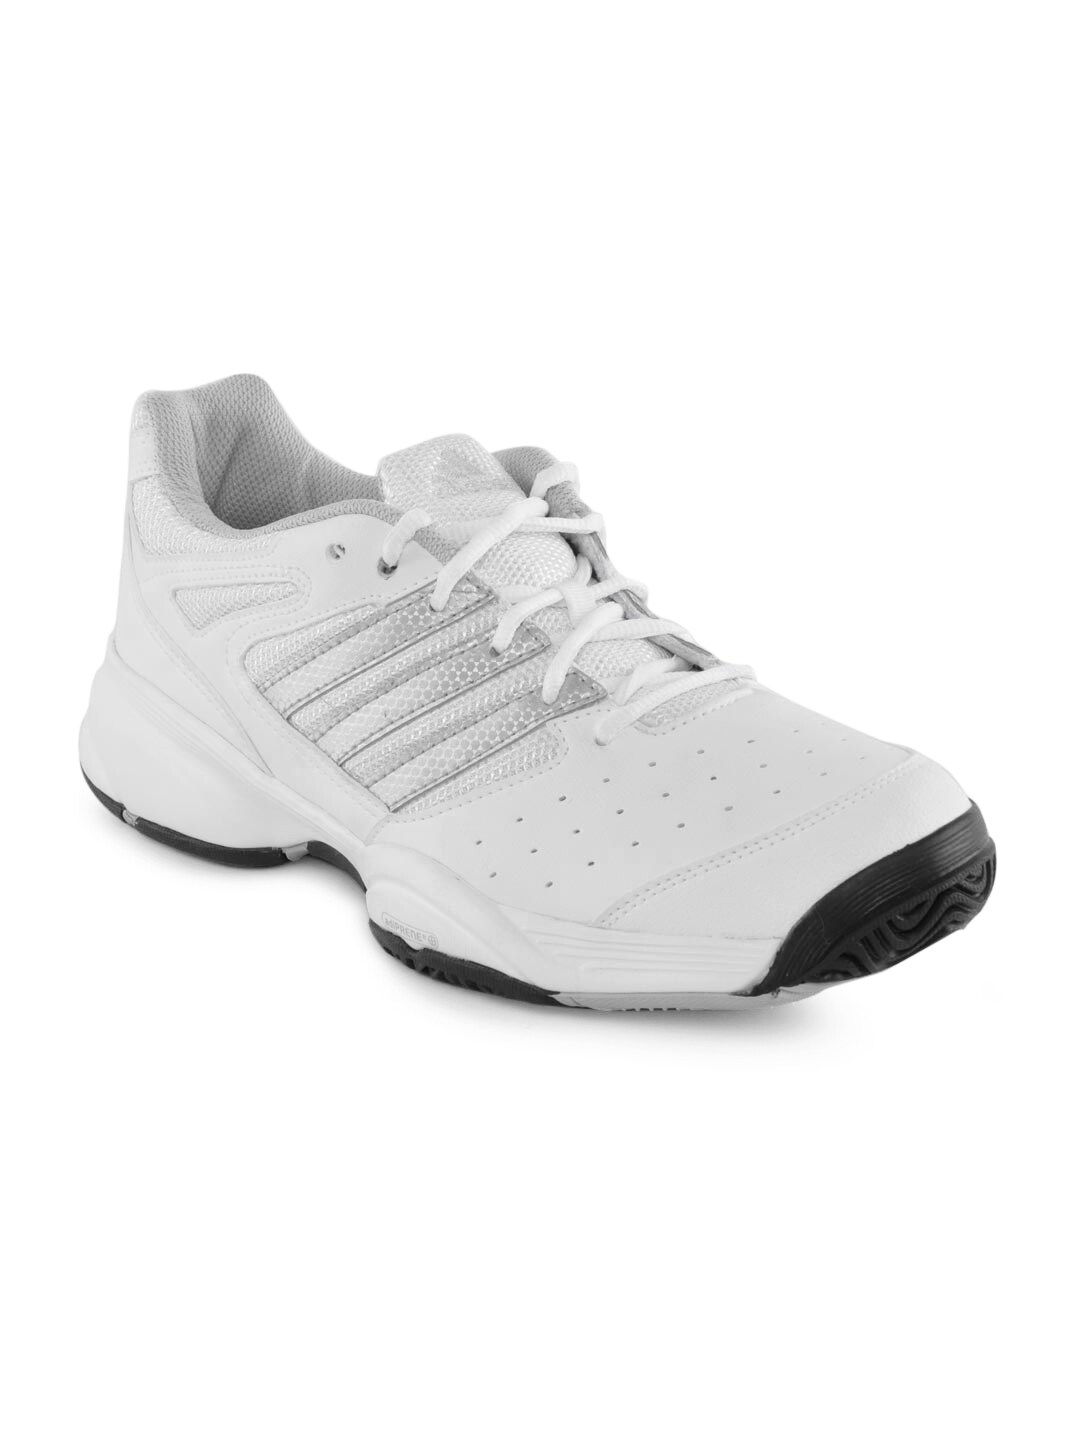 ADIDAS Men Swerve Str White Sports Shoes